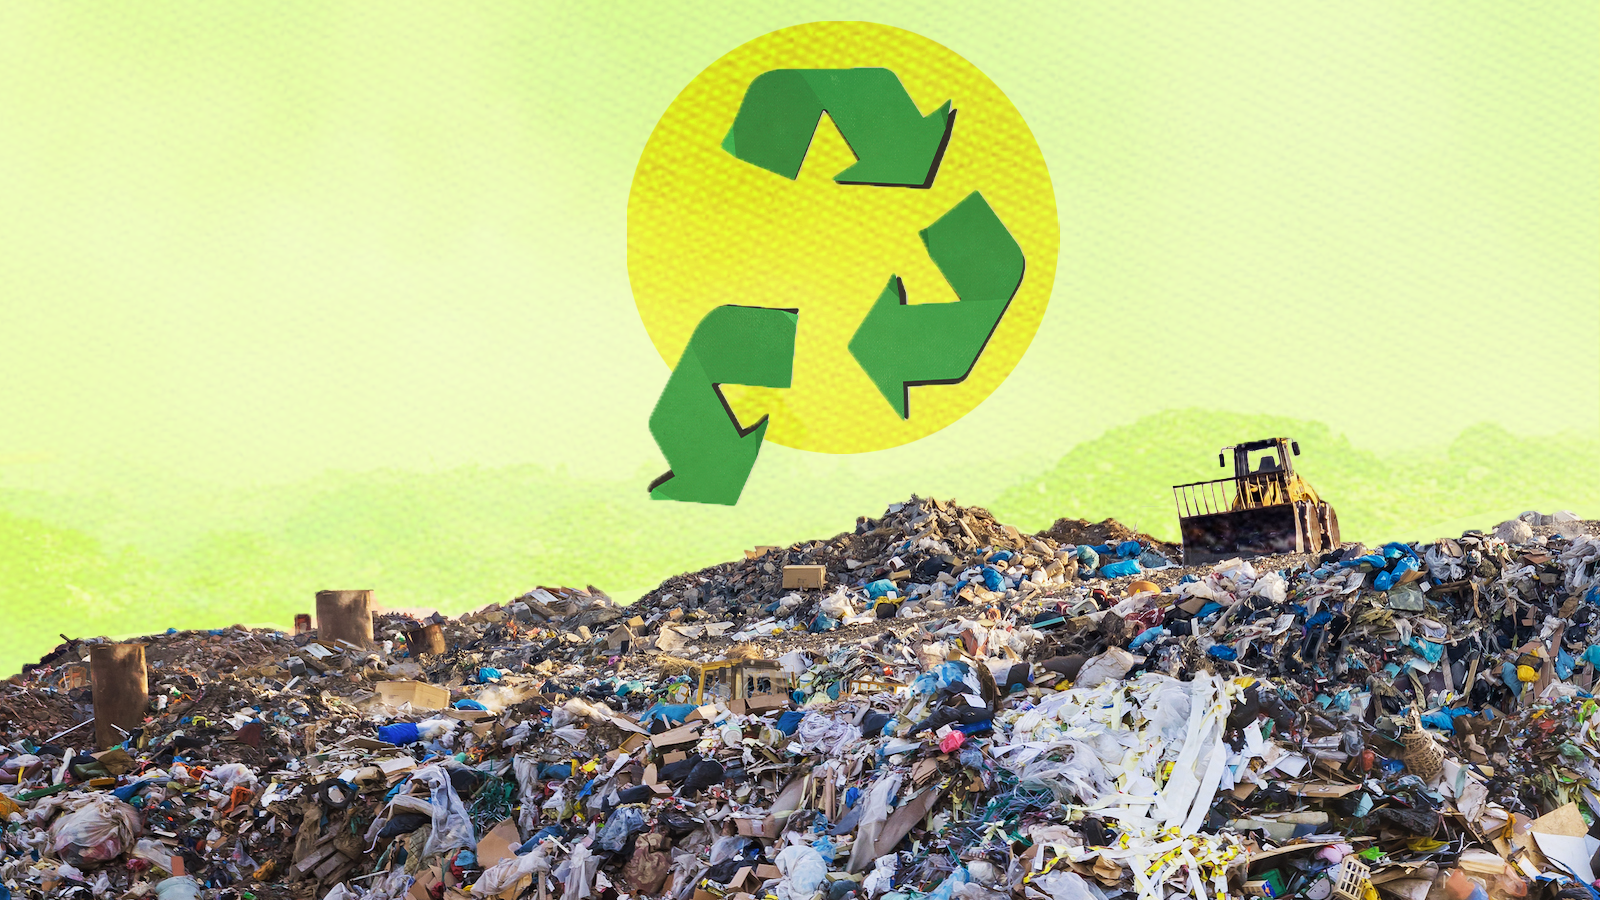 Recycling symbol points toward a landfill